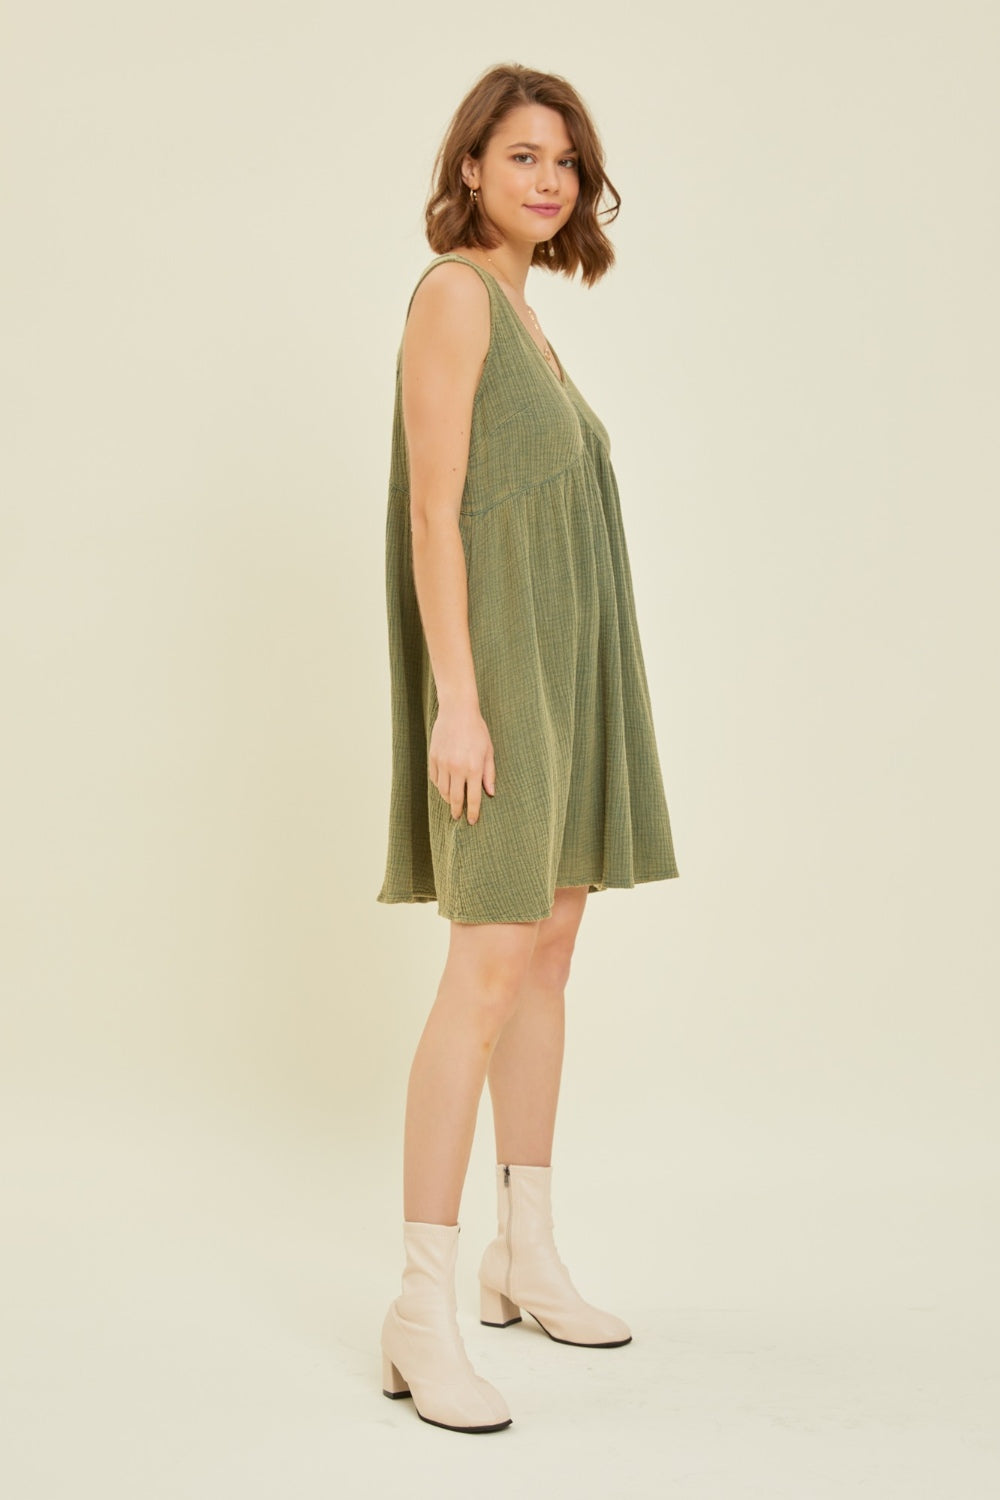 TEEK - Green Texture V-Neck Sleeveless Flare Dress DRESS TEEK Trend   